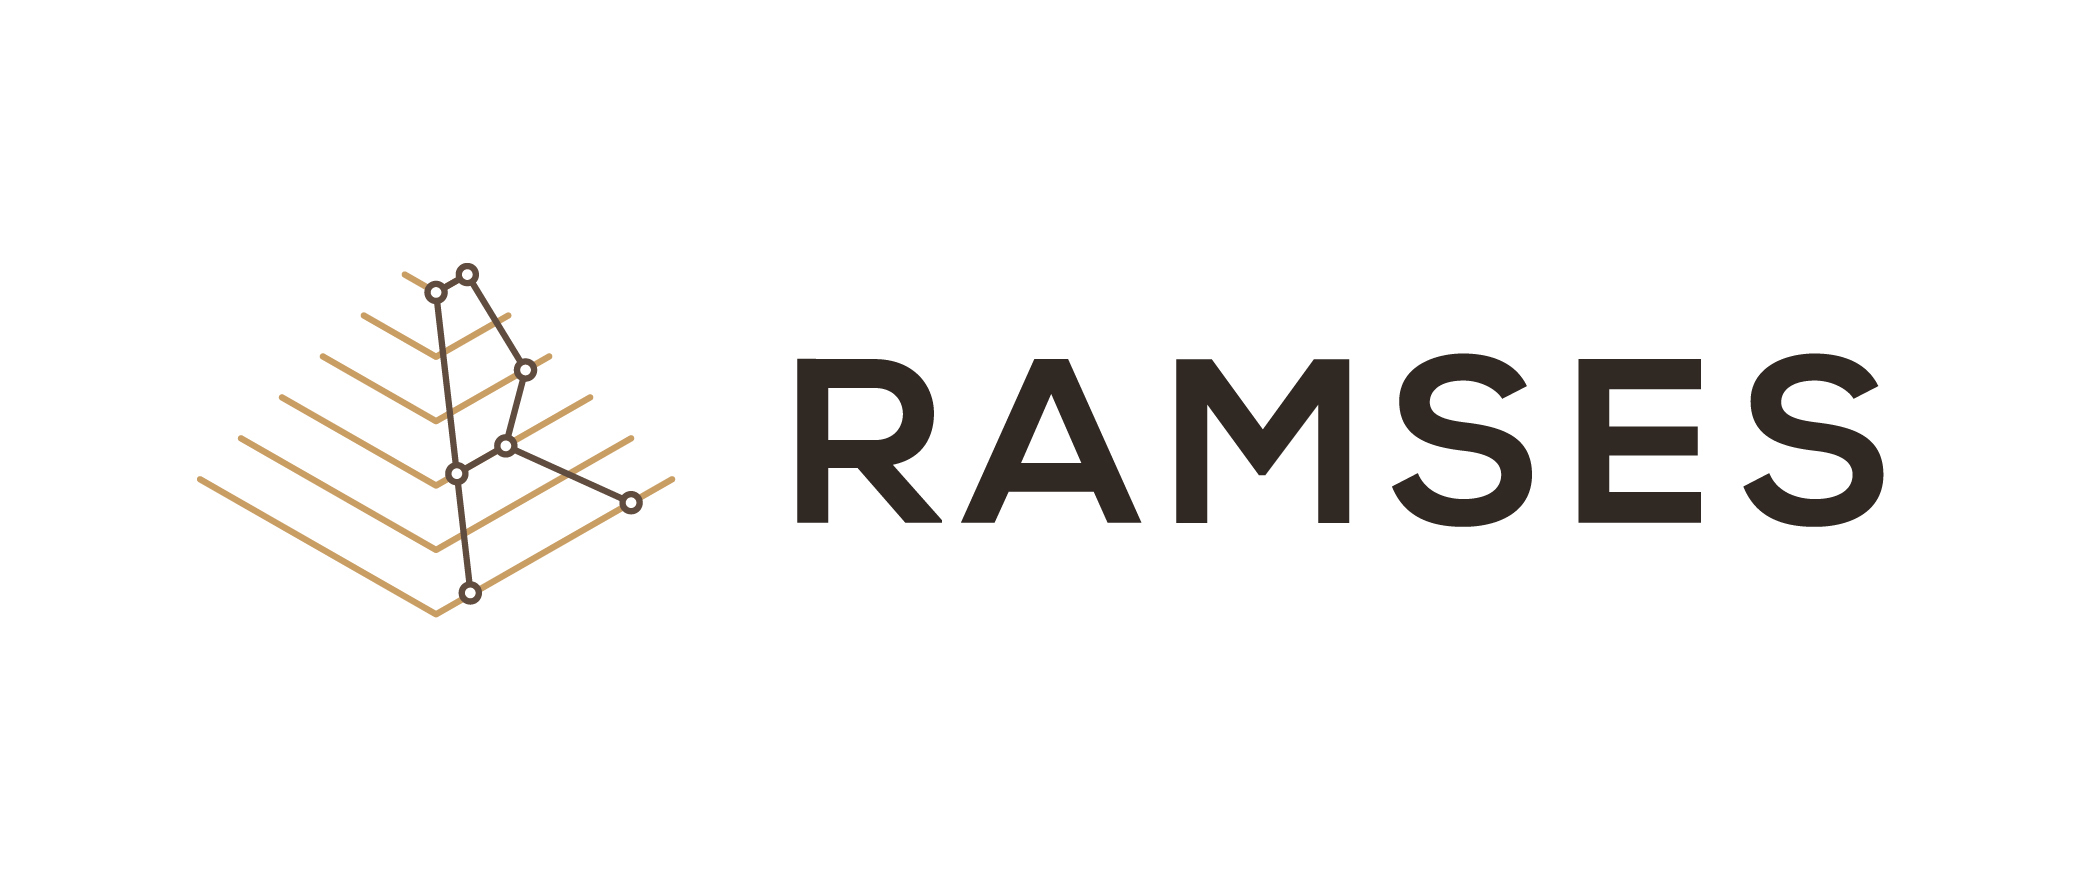 RAMSES: Malware analysis for digital forensics